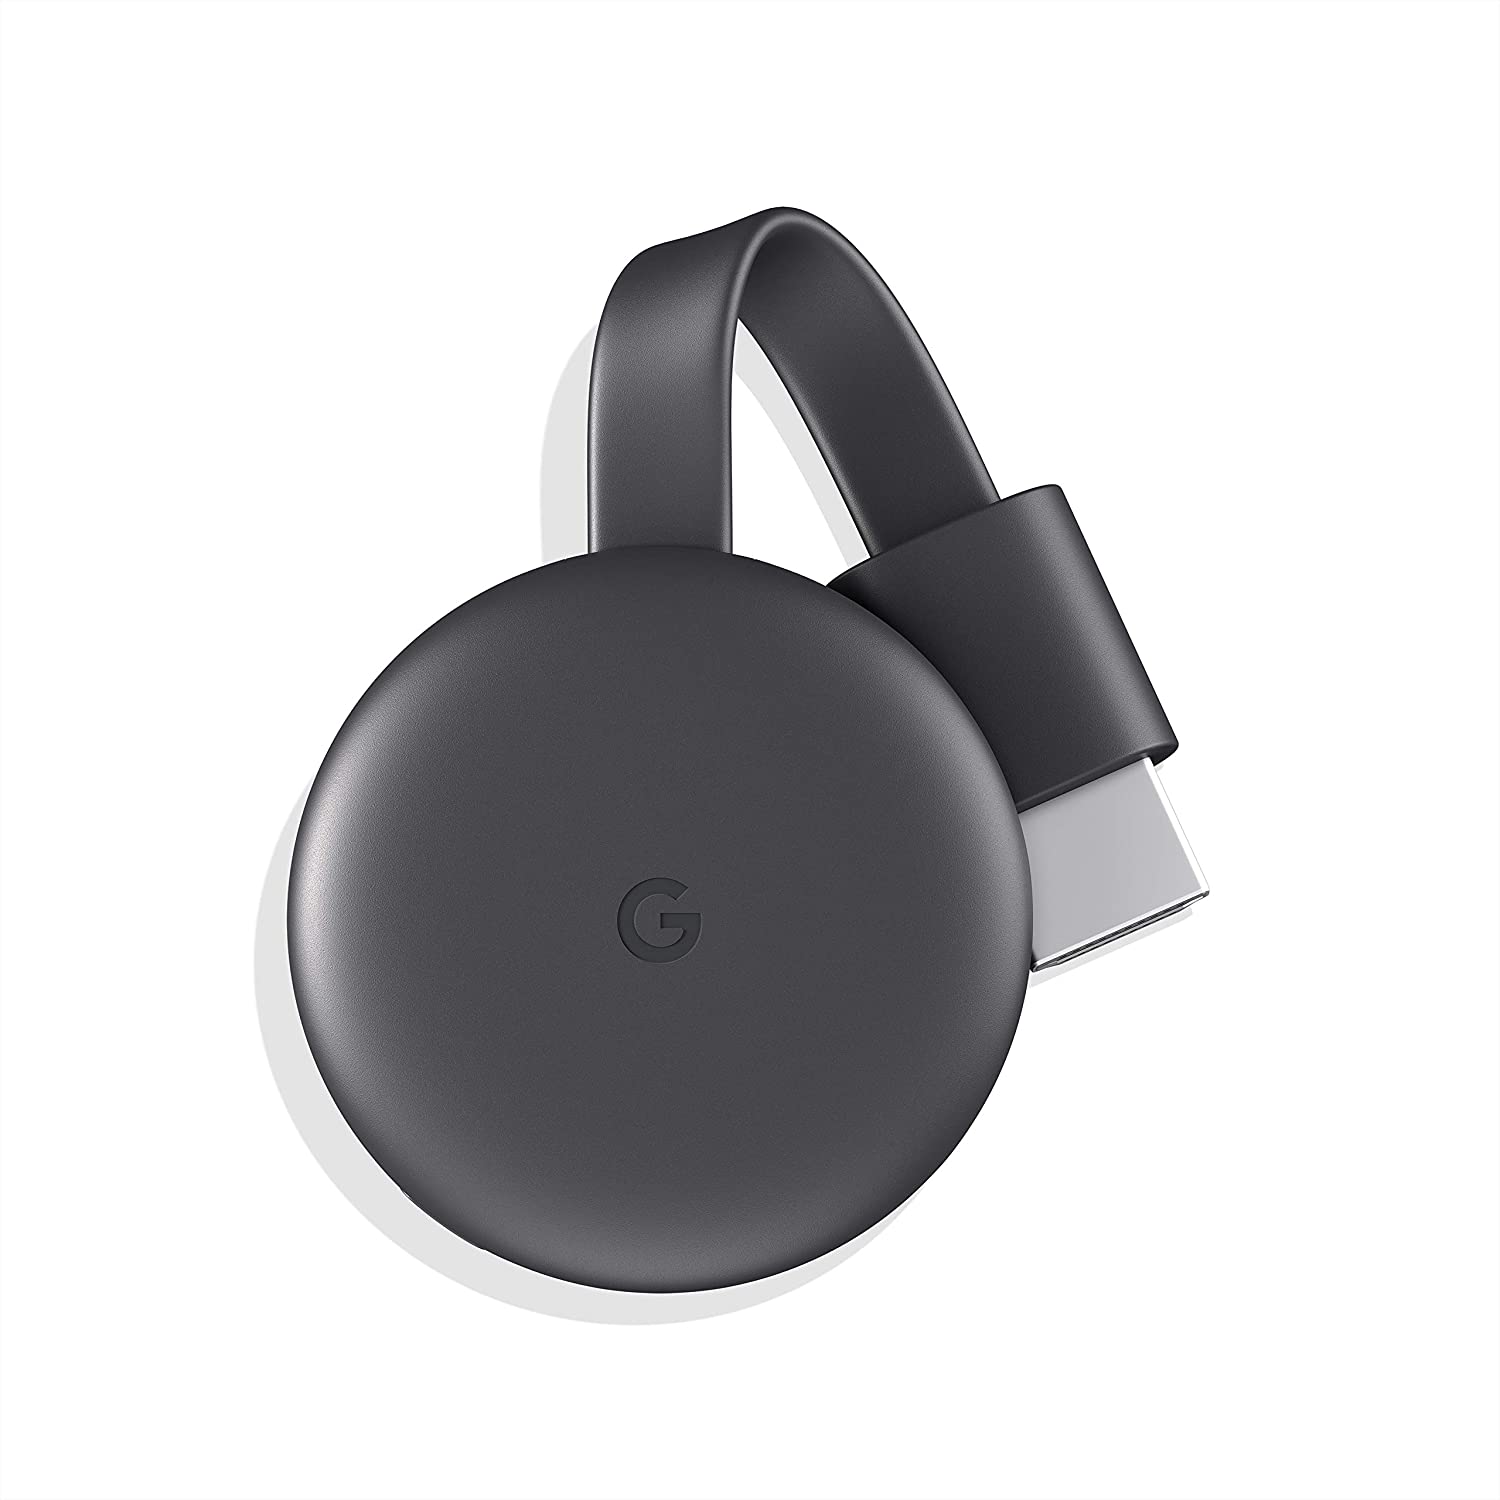 Google Chromecast (3rd Generation) - Charcoal Grey